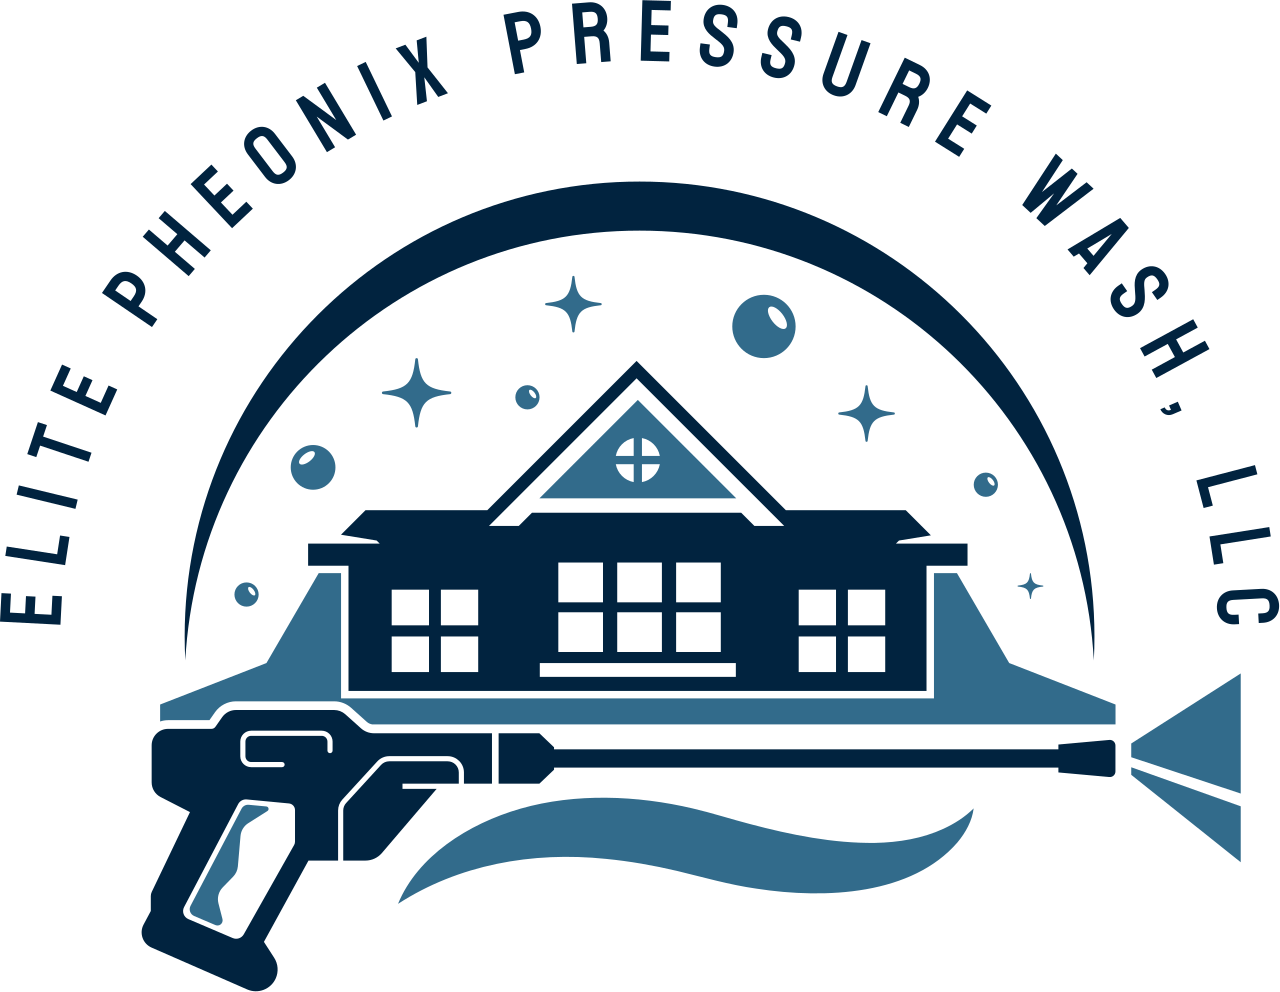 Elite Pheonix Pressure Wash, LLC's logo